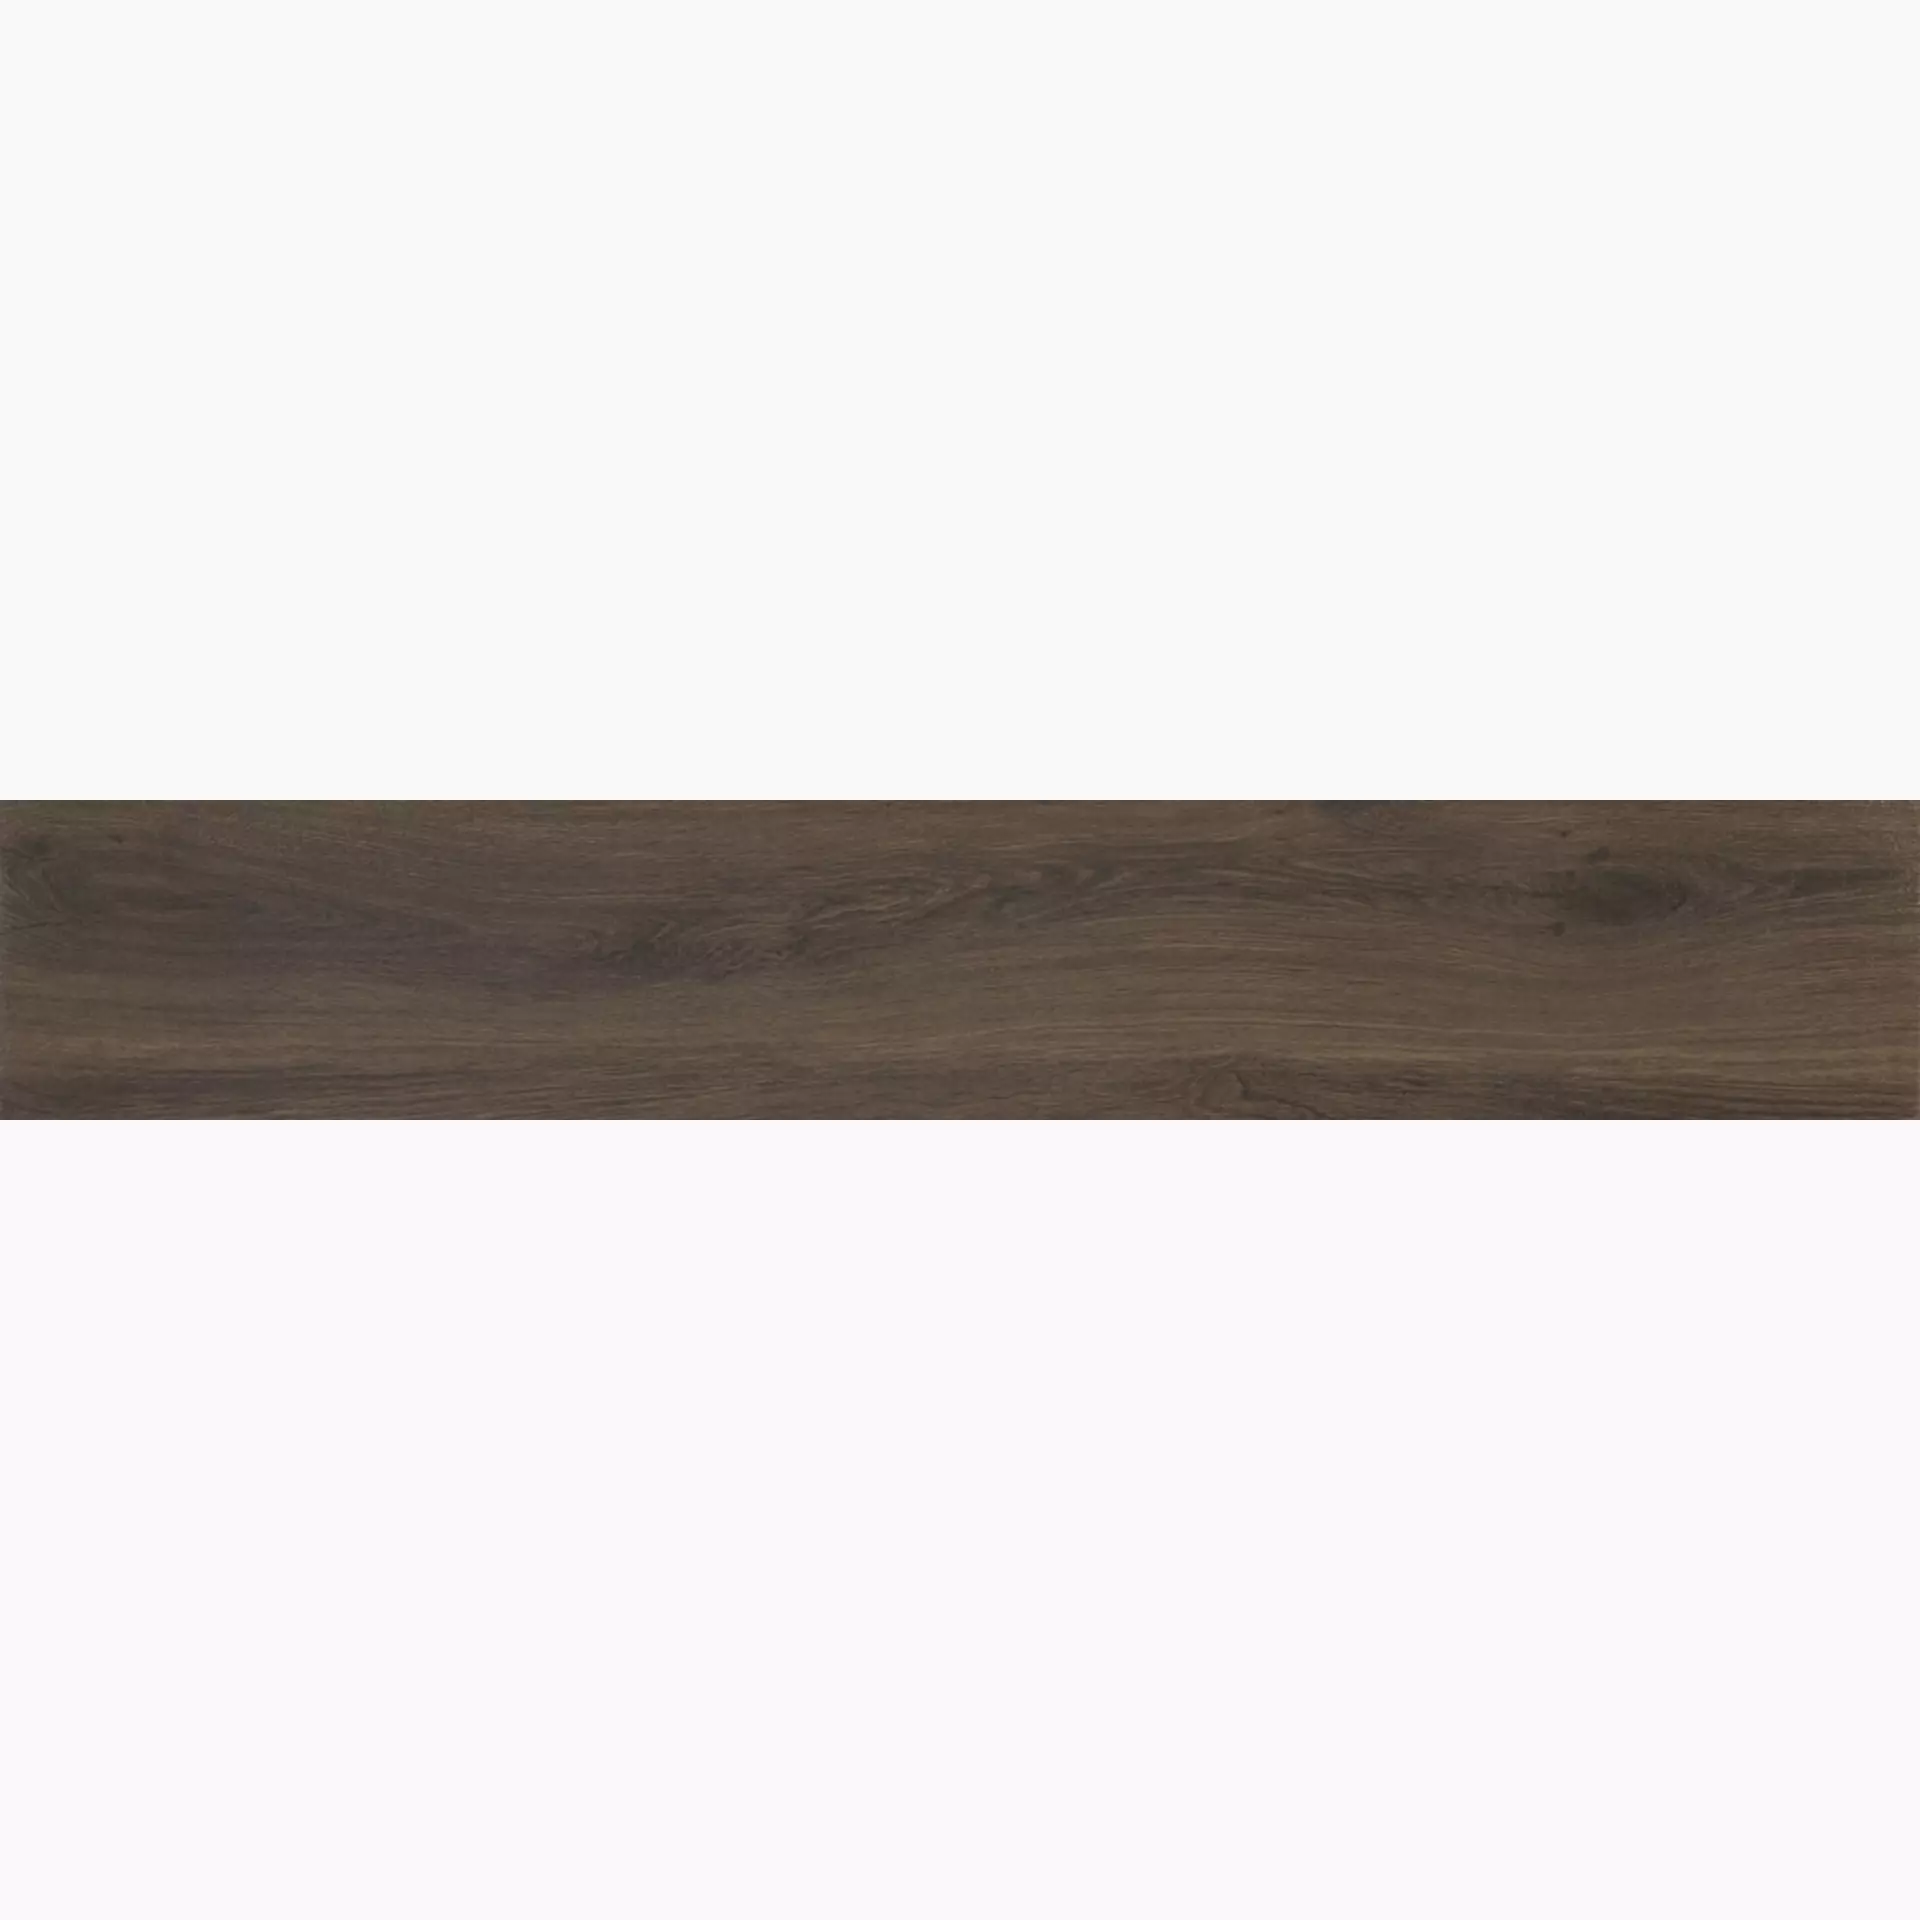 Rondine Bricola Ebano Naturale J85987 20x120cm rectified 9,5mm